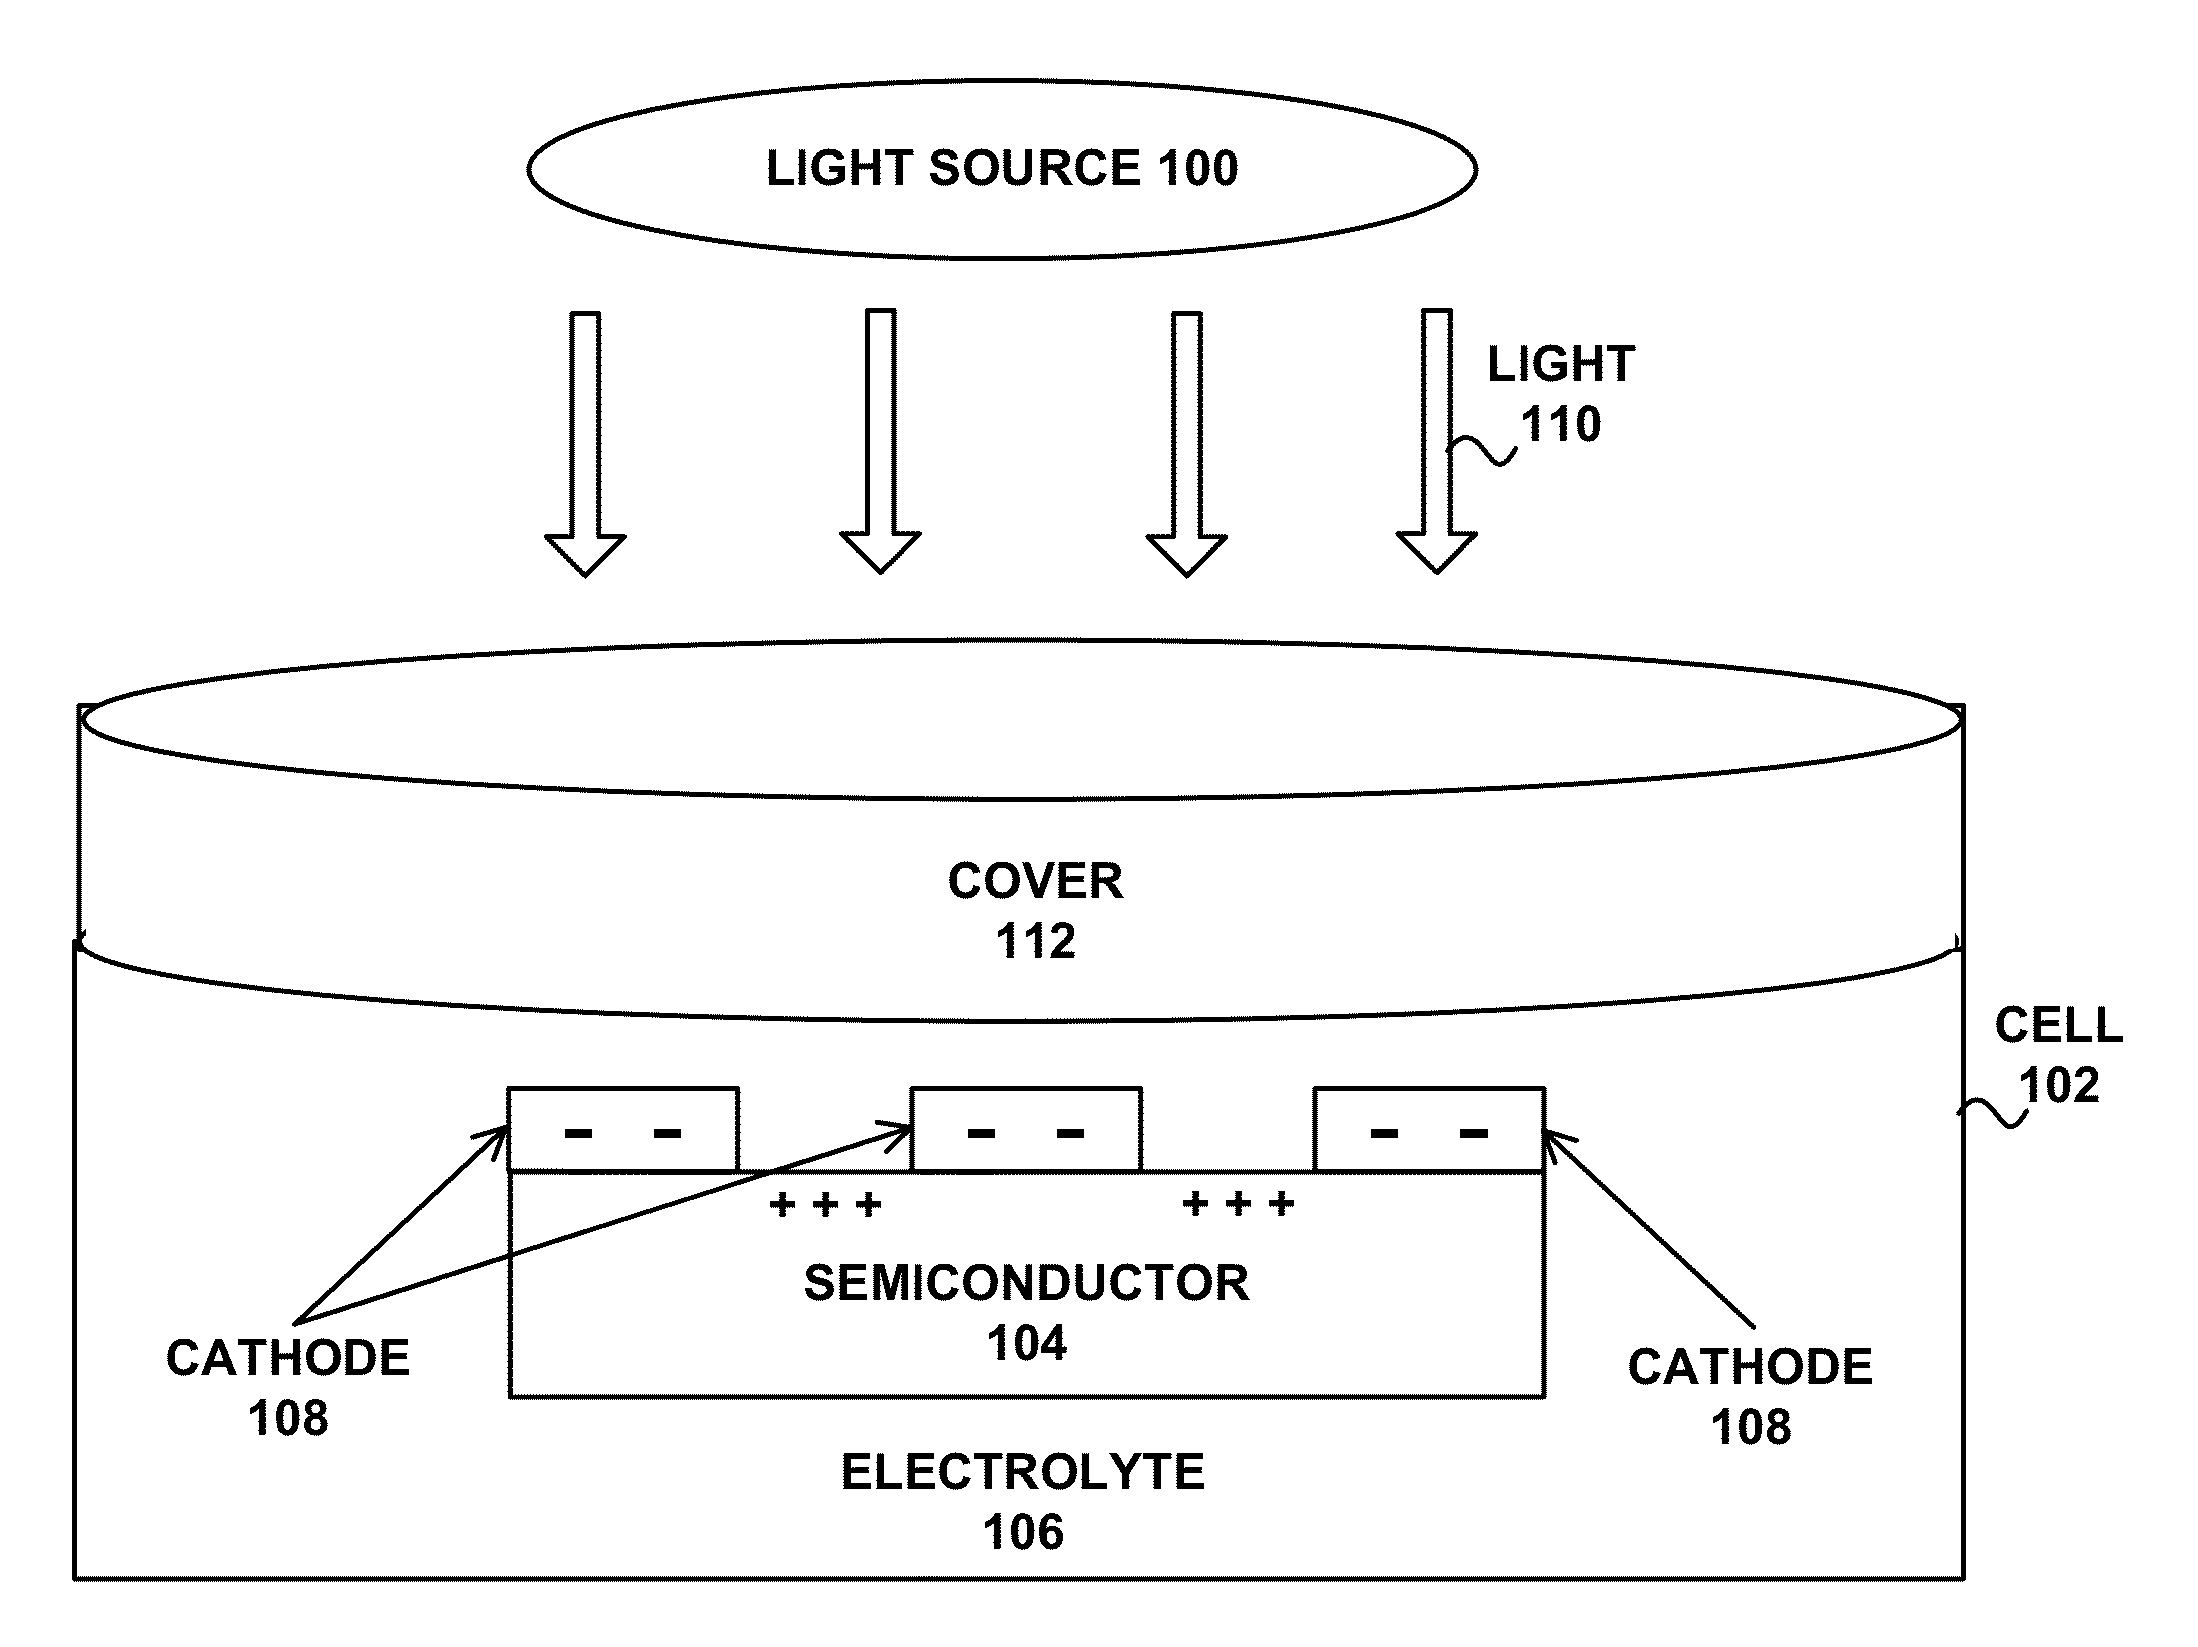 Pec etching of (20-2-1) semipolar gallium nitride for external efficiency enhancement in light emitting diode applications